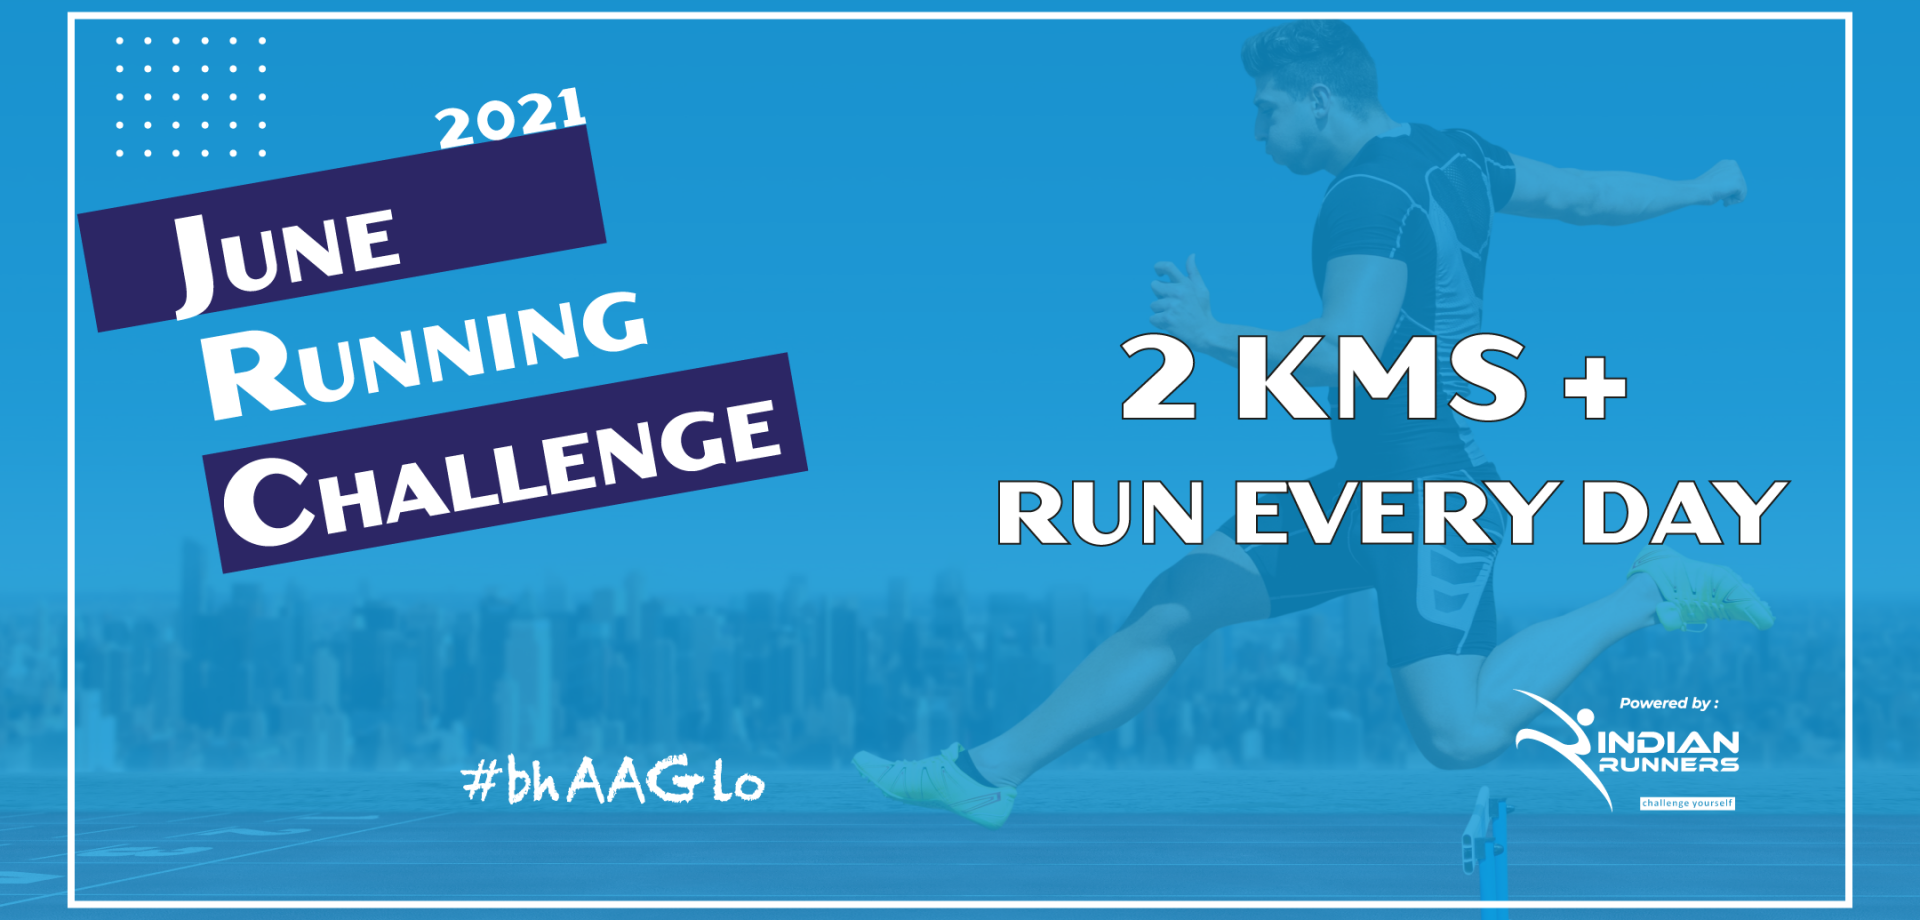 2021 running challenge